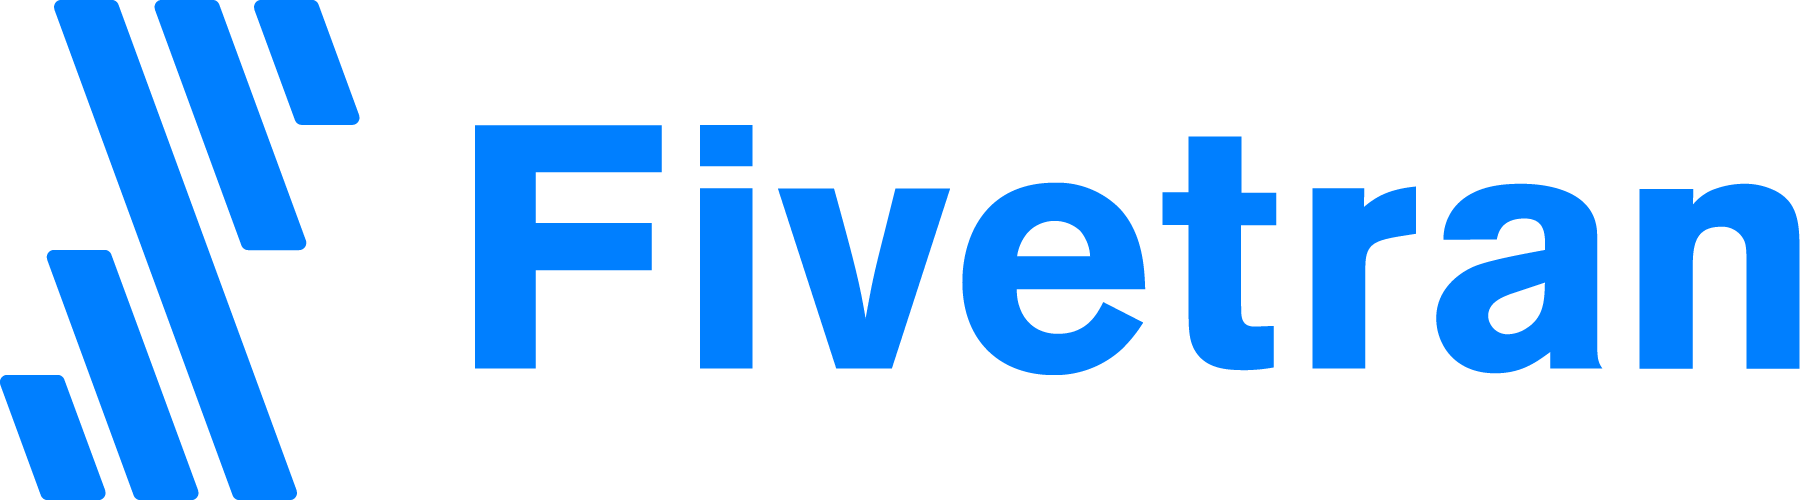 Fivetran sponsorship logo